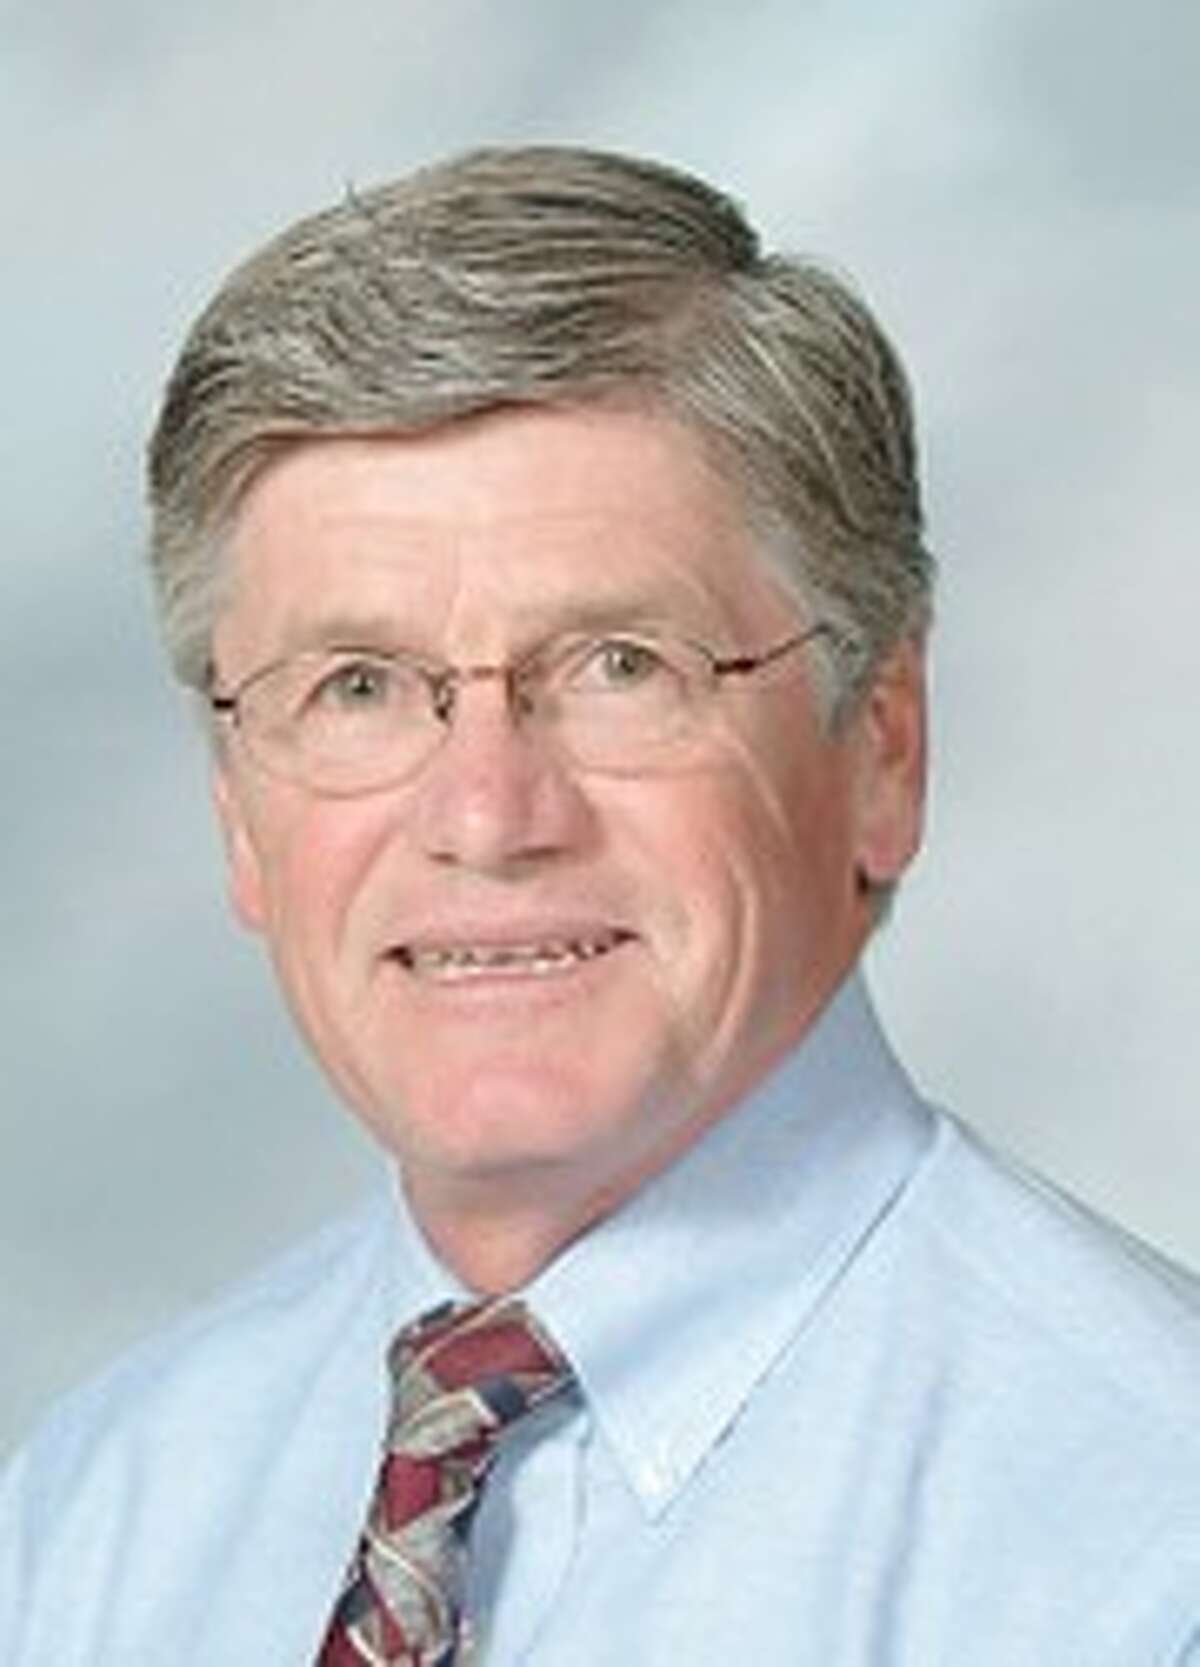 Former Reed City High School principal Tom Antioho